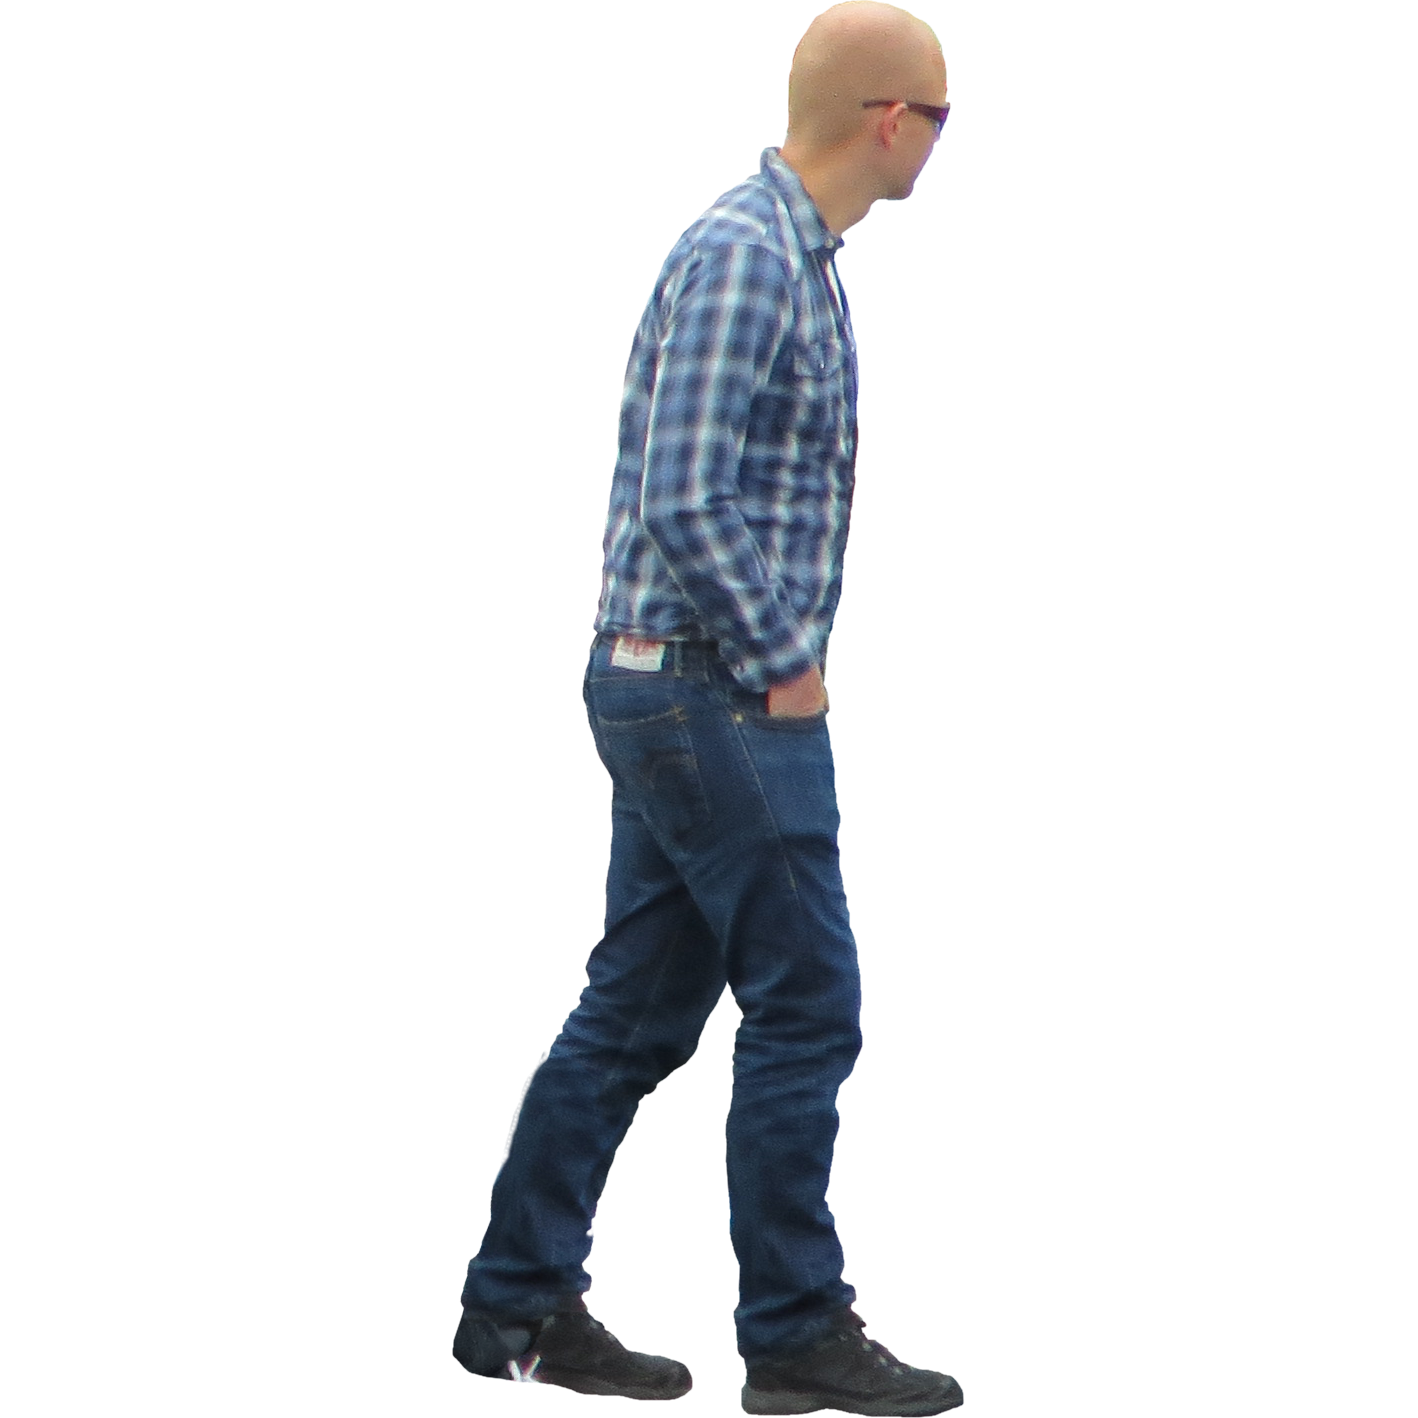 Png Person Walking Transparent Person Walking - Man Walking Png Transparent  PNG - 1199x1199 - Free Download on NicePNG